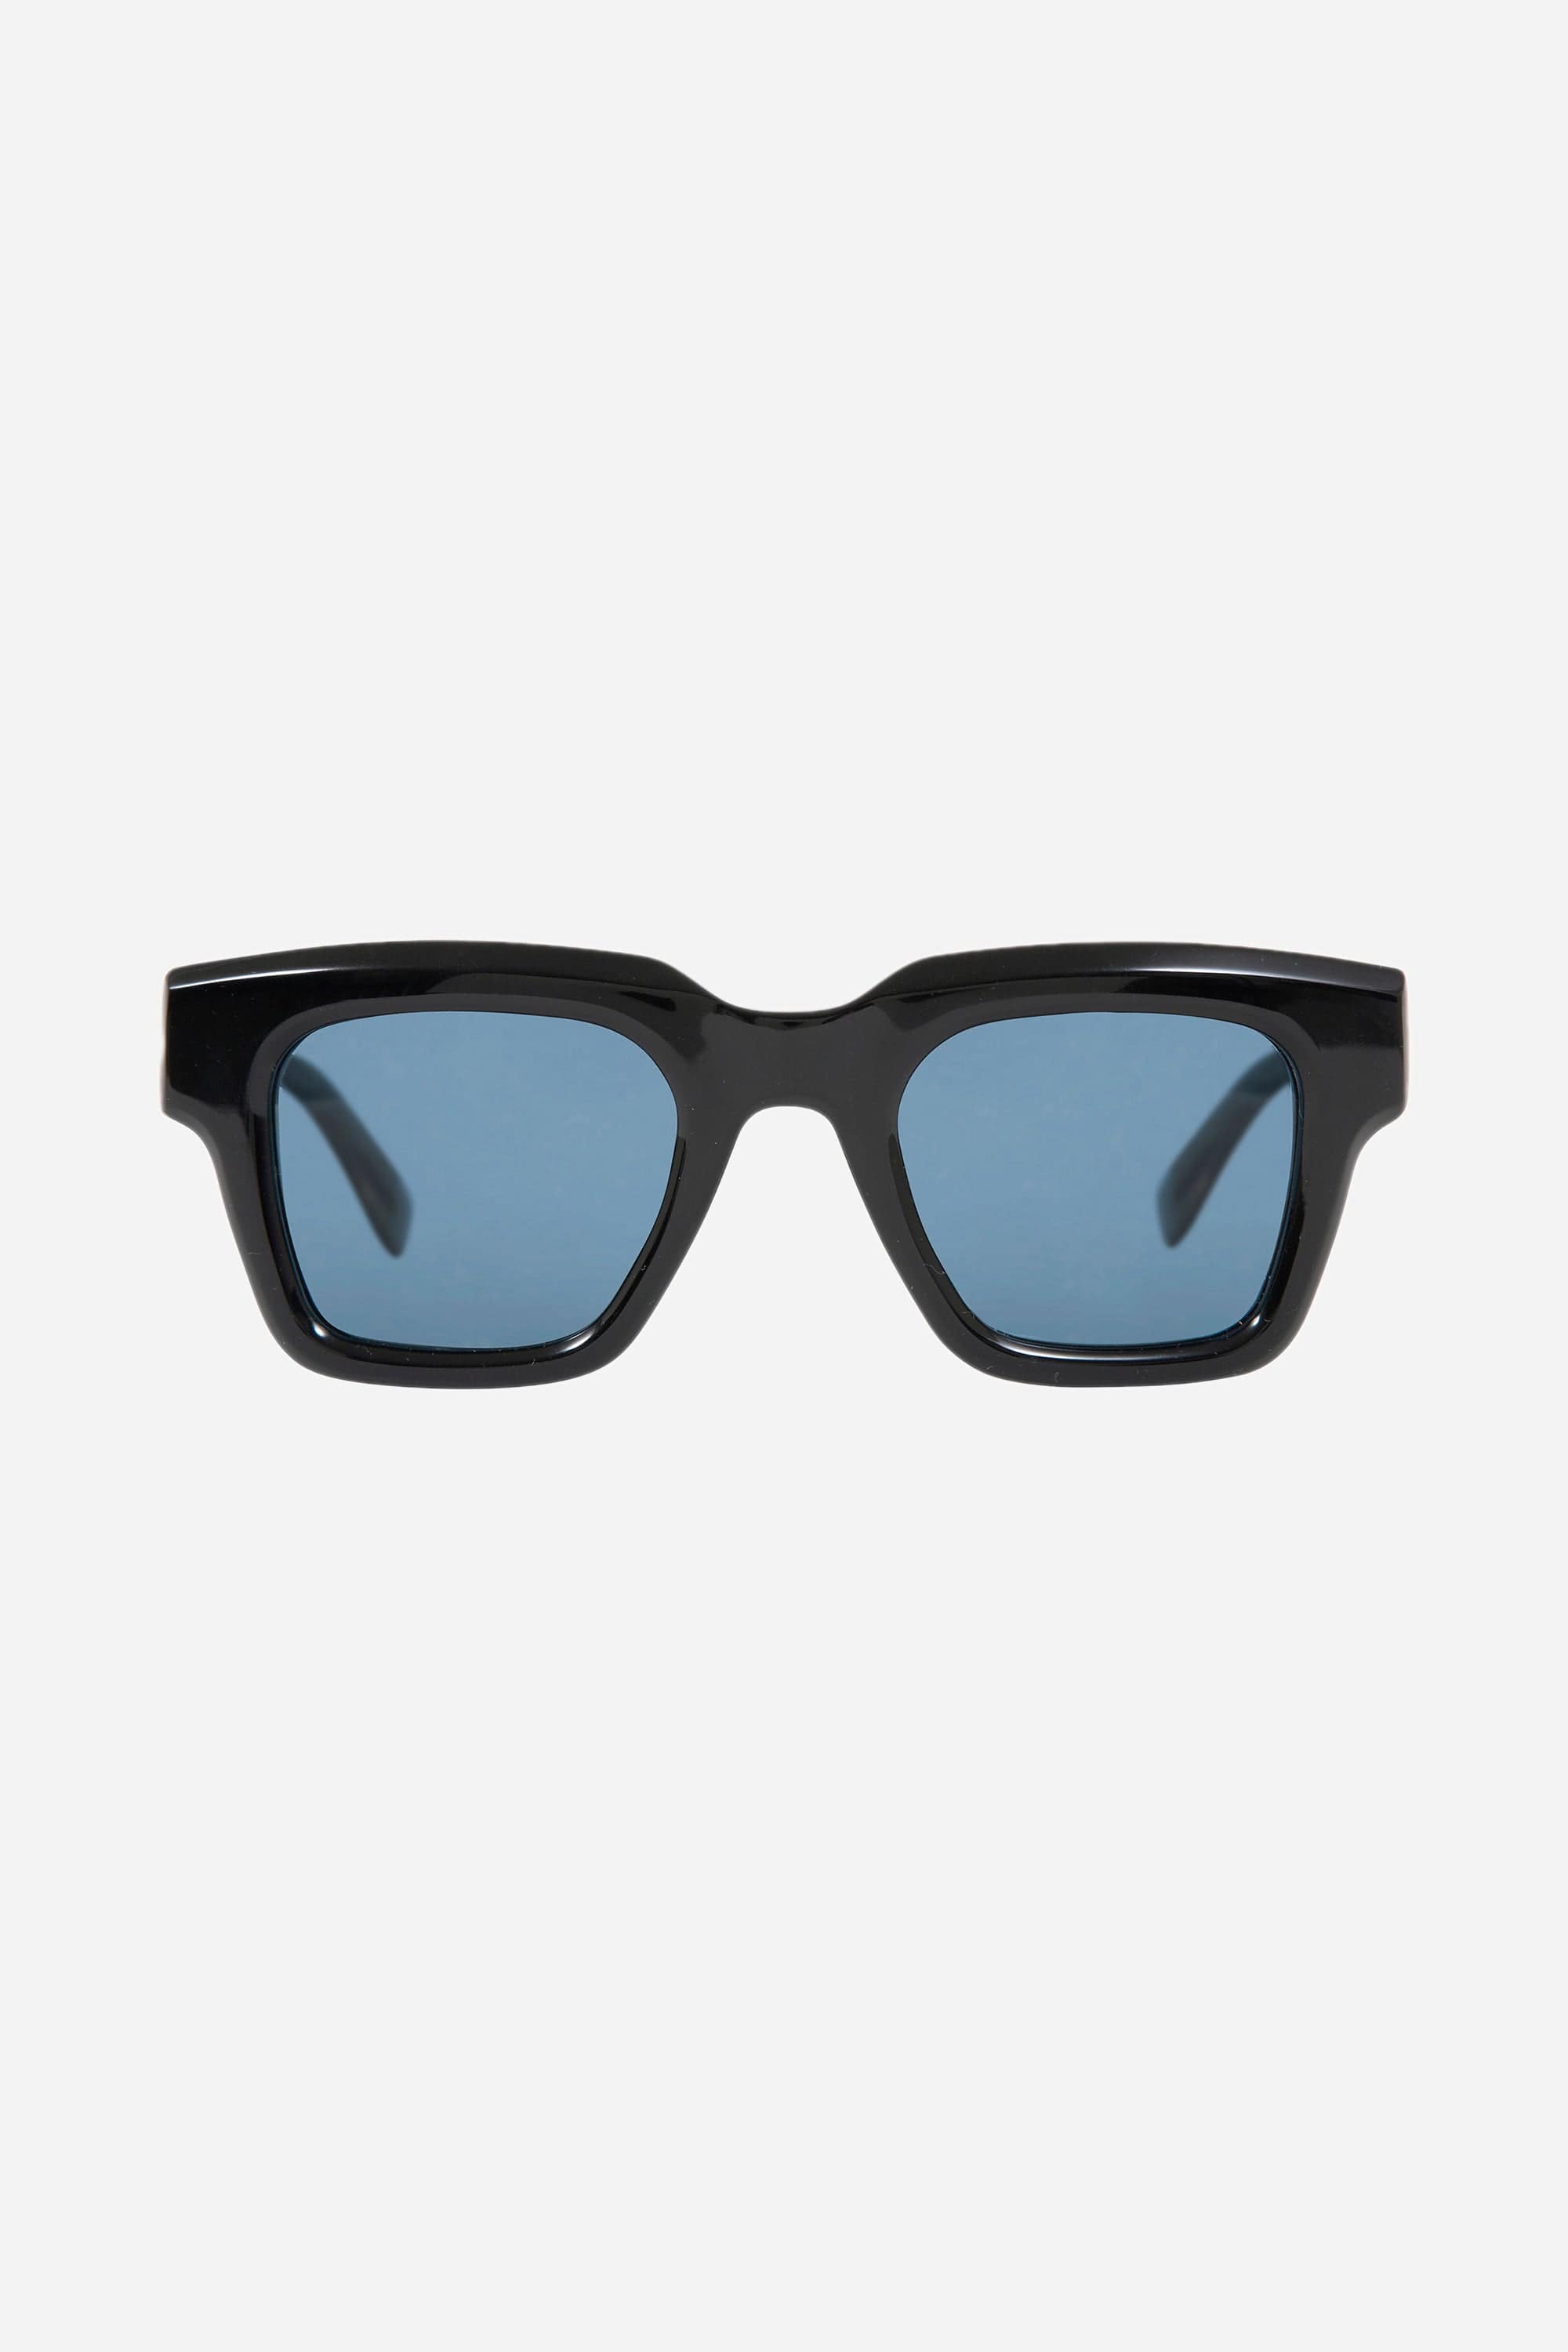 Gigi Studios squared black and blue sunglasses - Eyewear Club